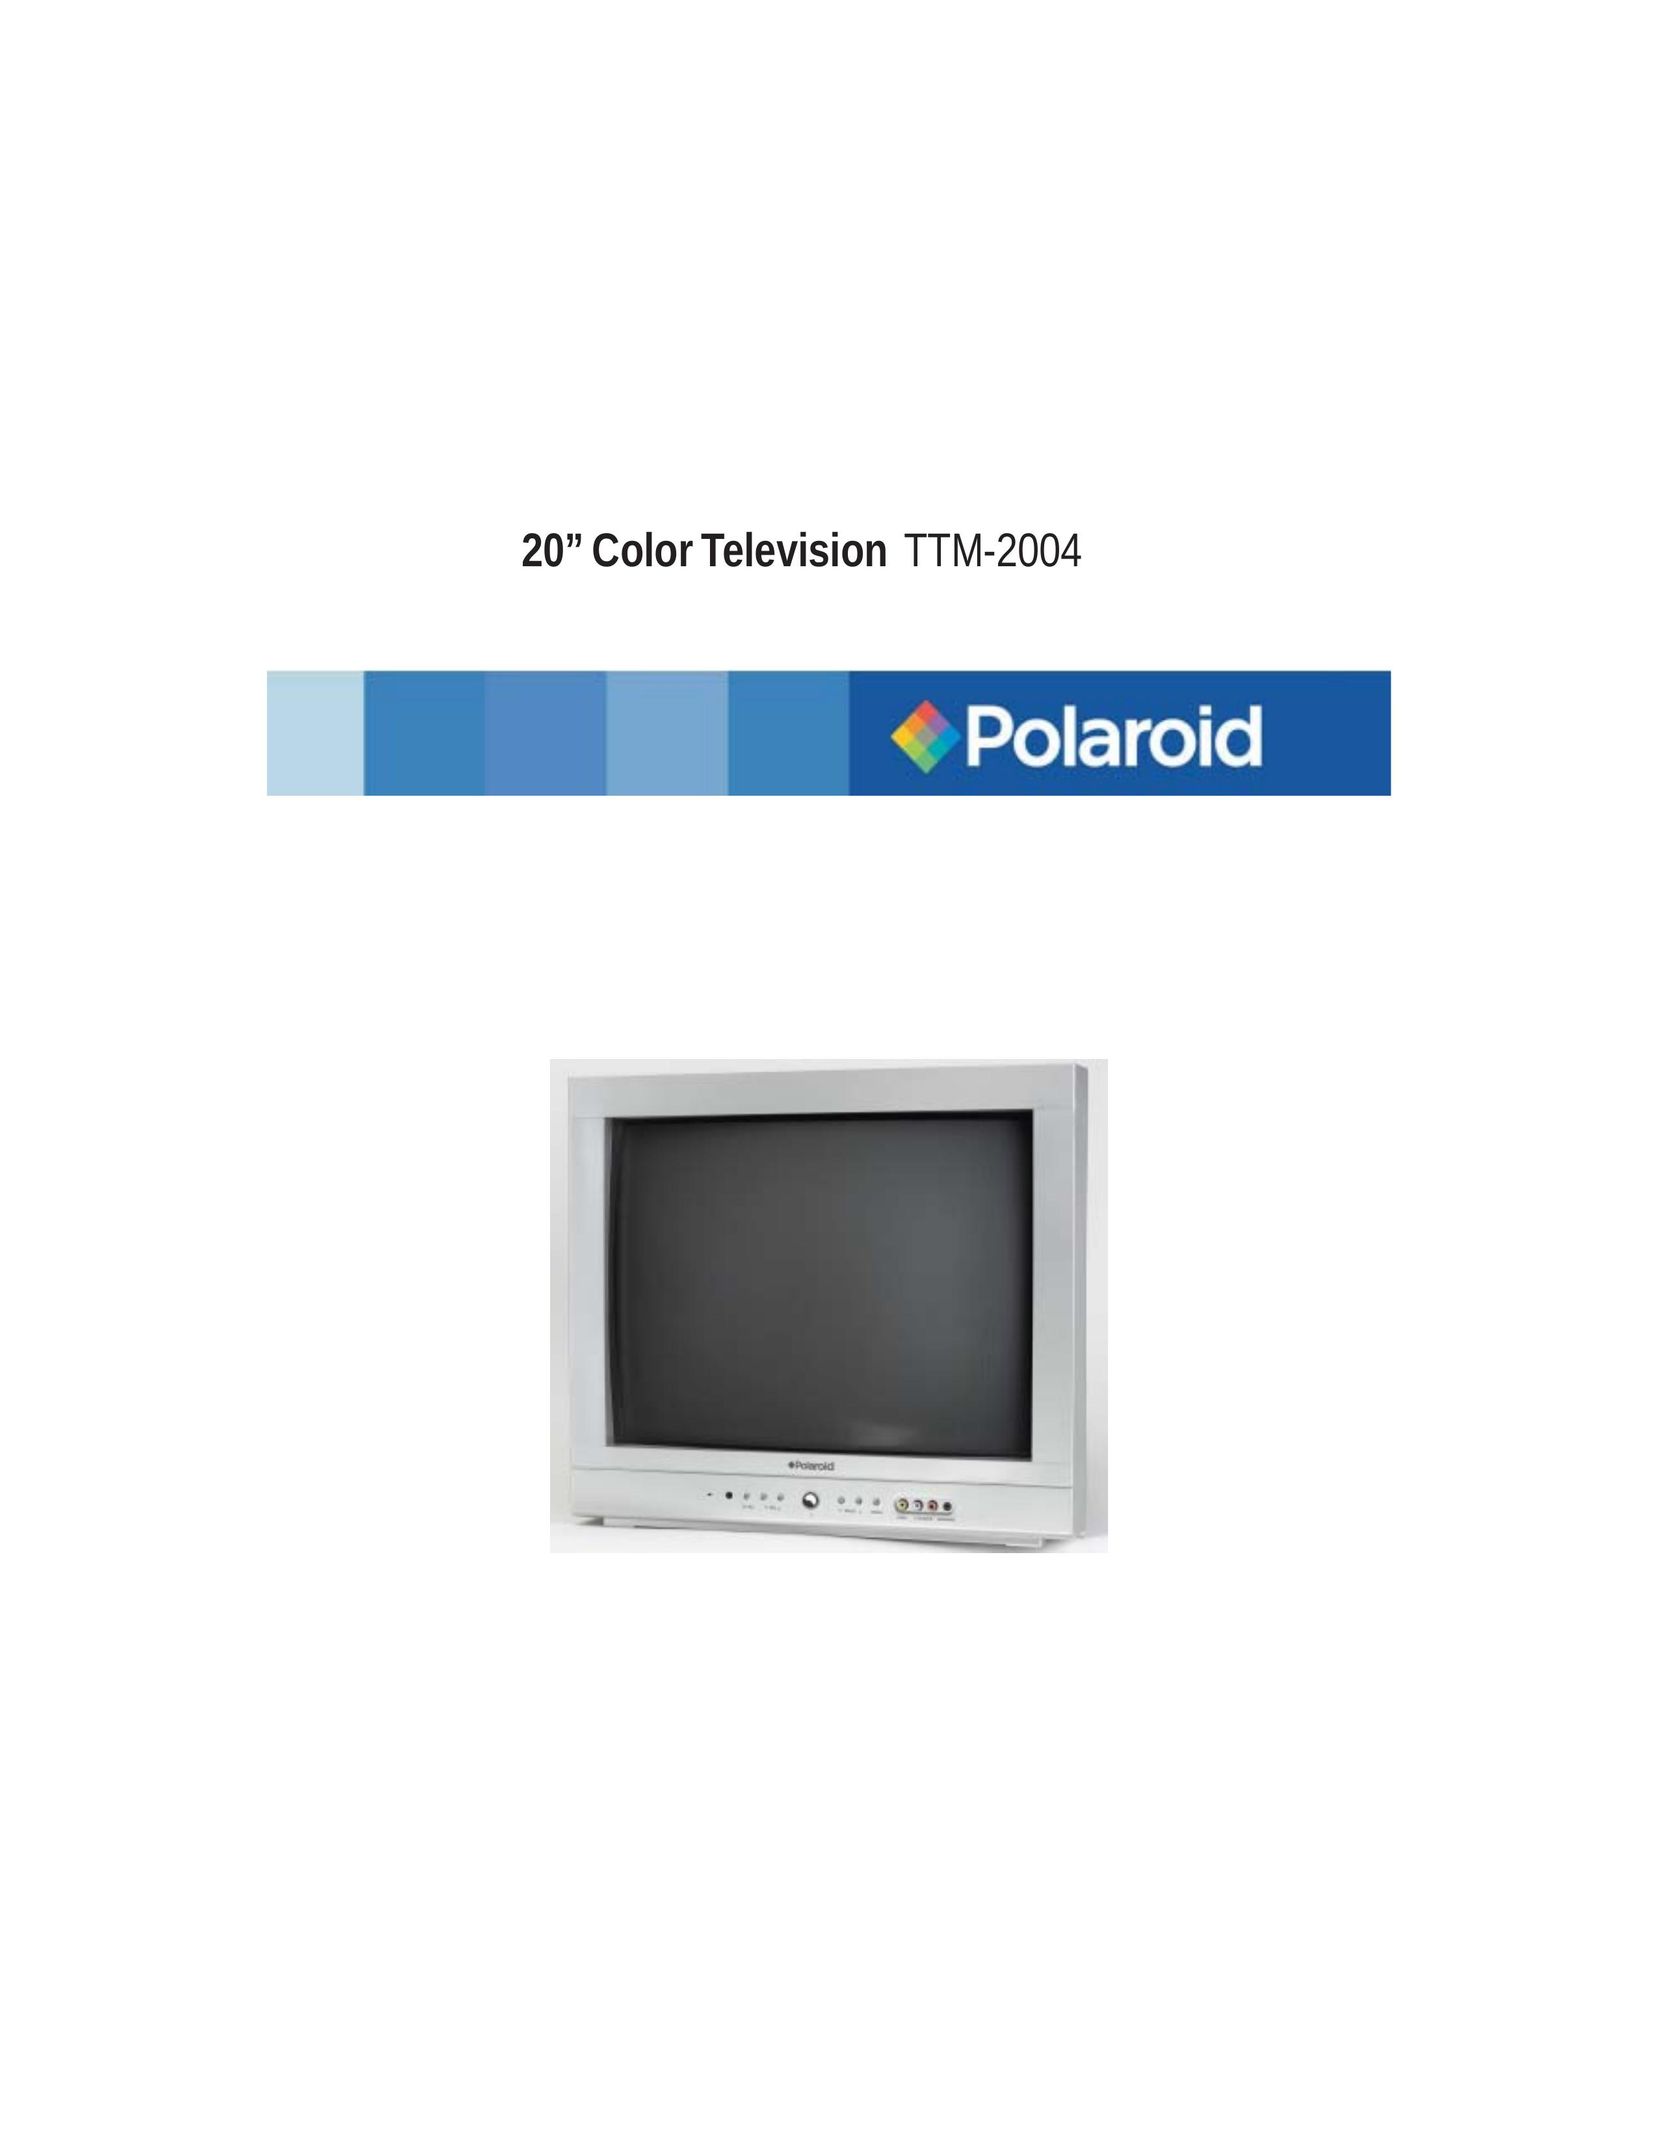 Polaroid TTM-2004 CRT Television User Manual